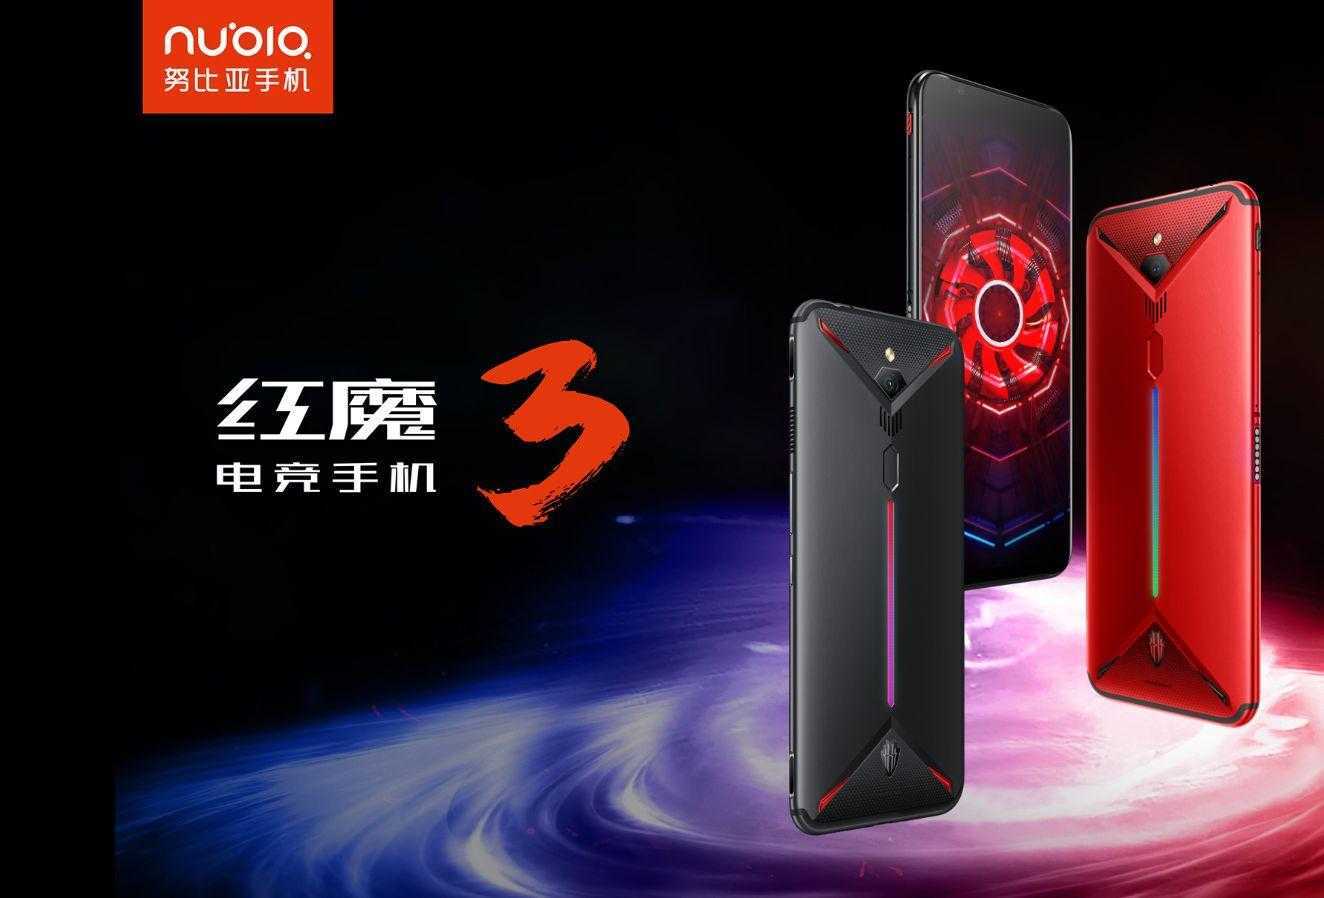 В Китае представлен игровой смартфон Nubia Red Magic 3: Snapdragon 855, 8K видео и аккумулятор емкостью 5000 мАч (nubia red magic 3 launch)